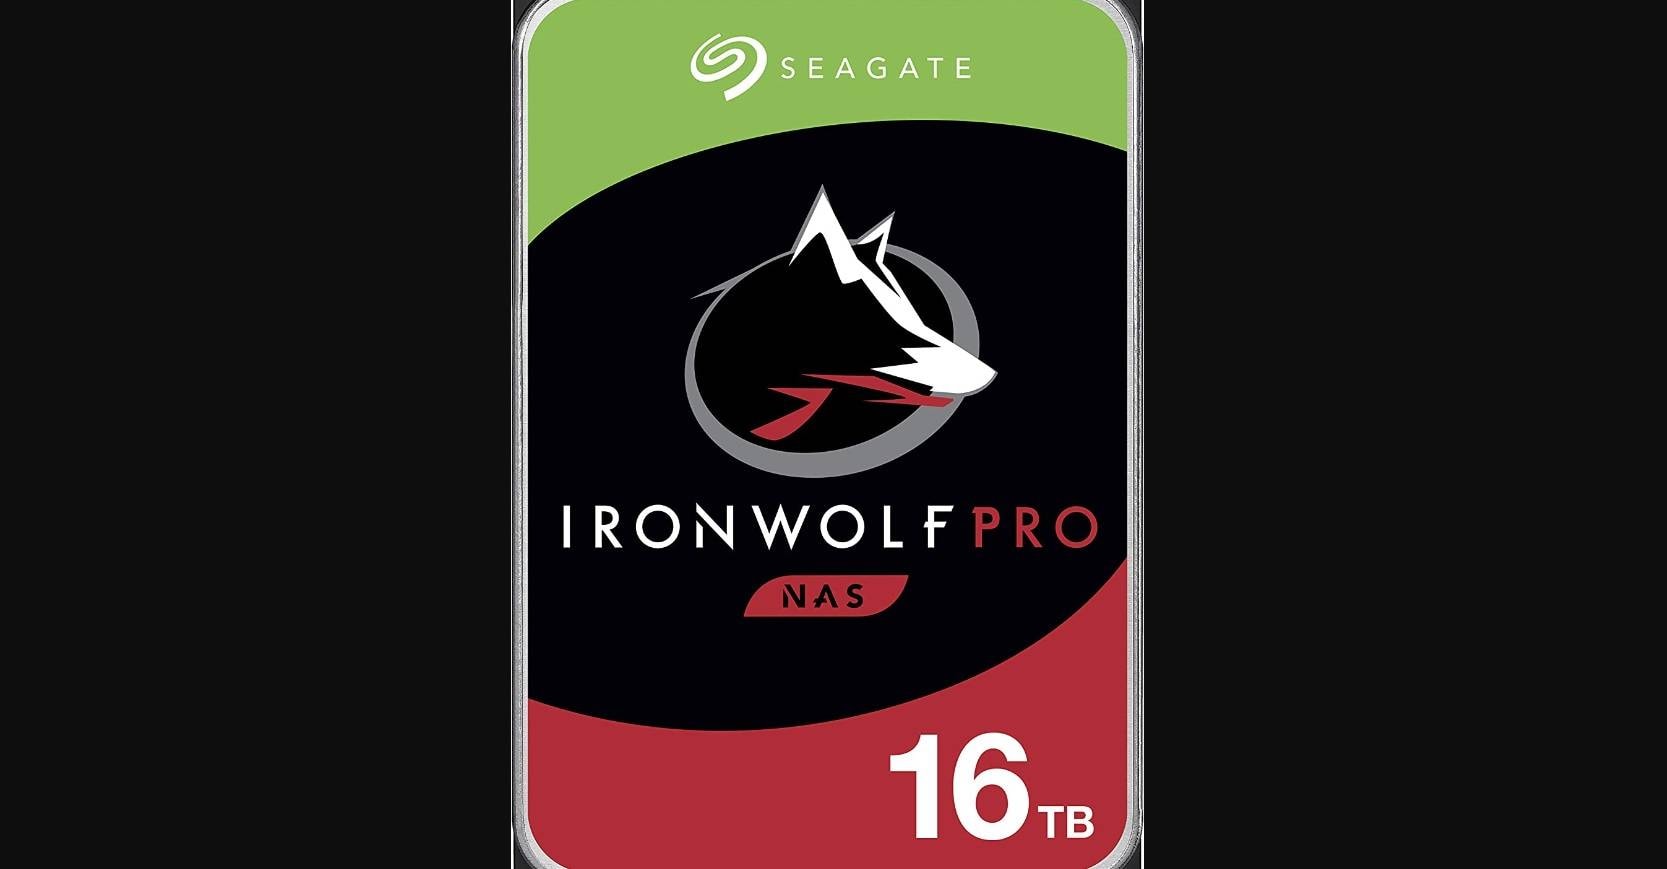 seagate ironwolf pro nas hard drive